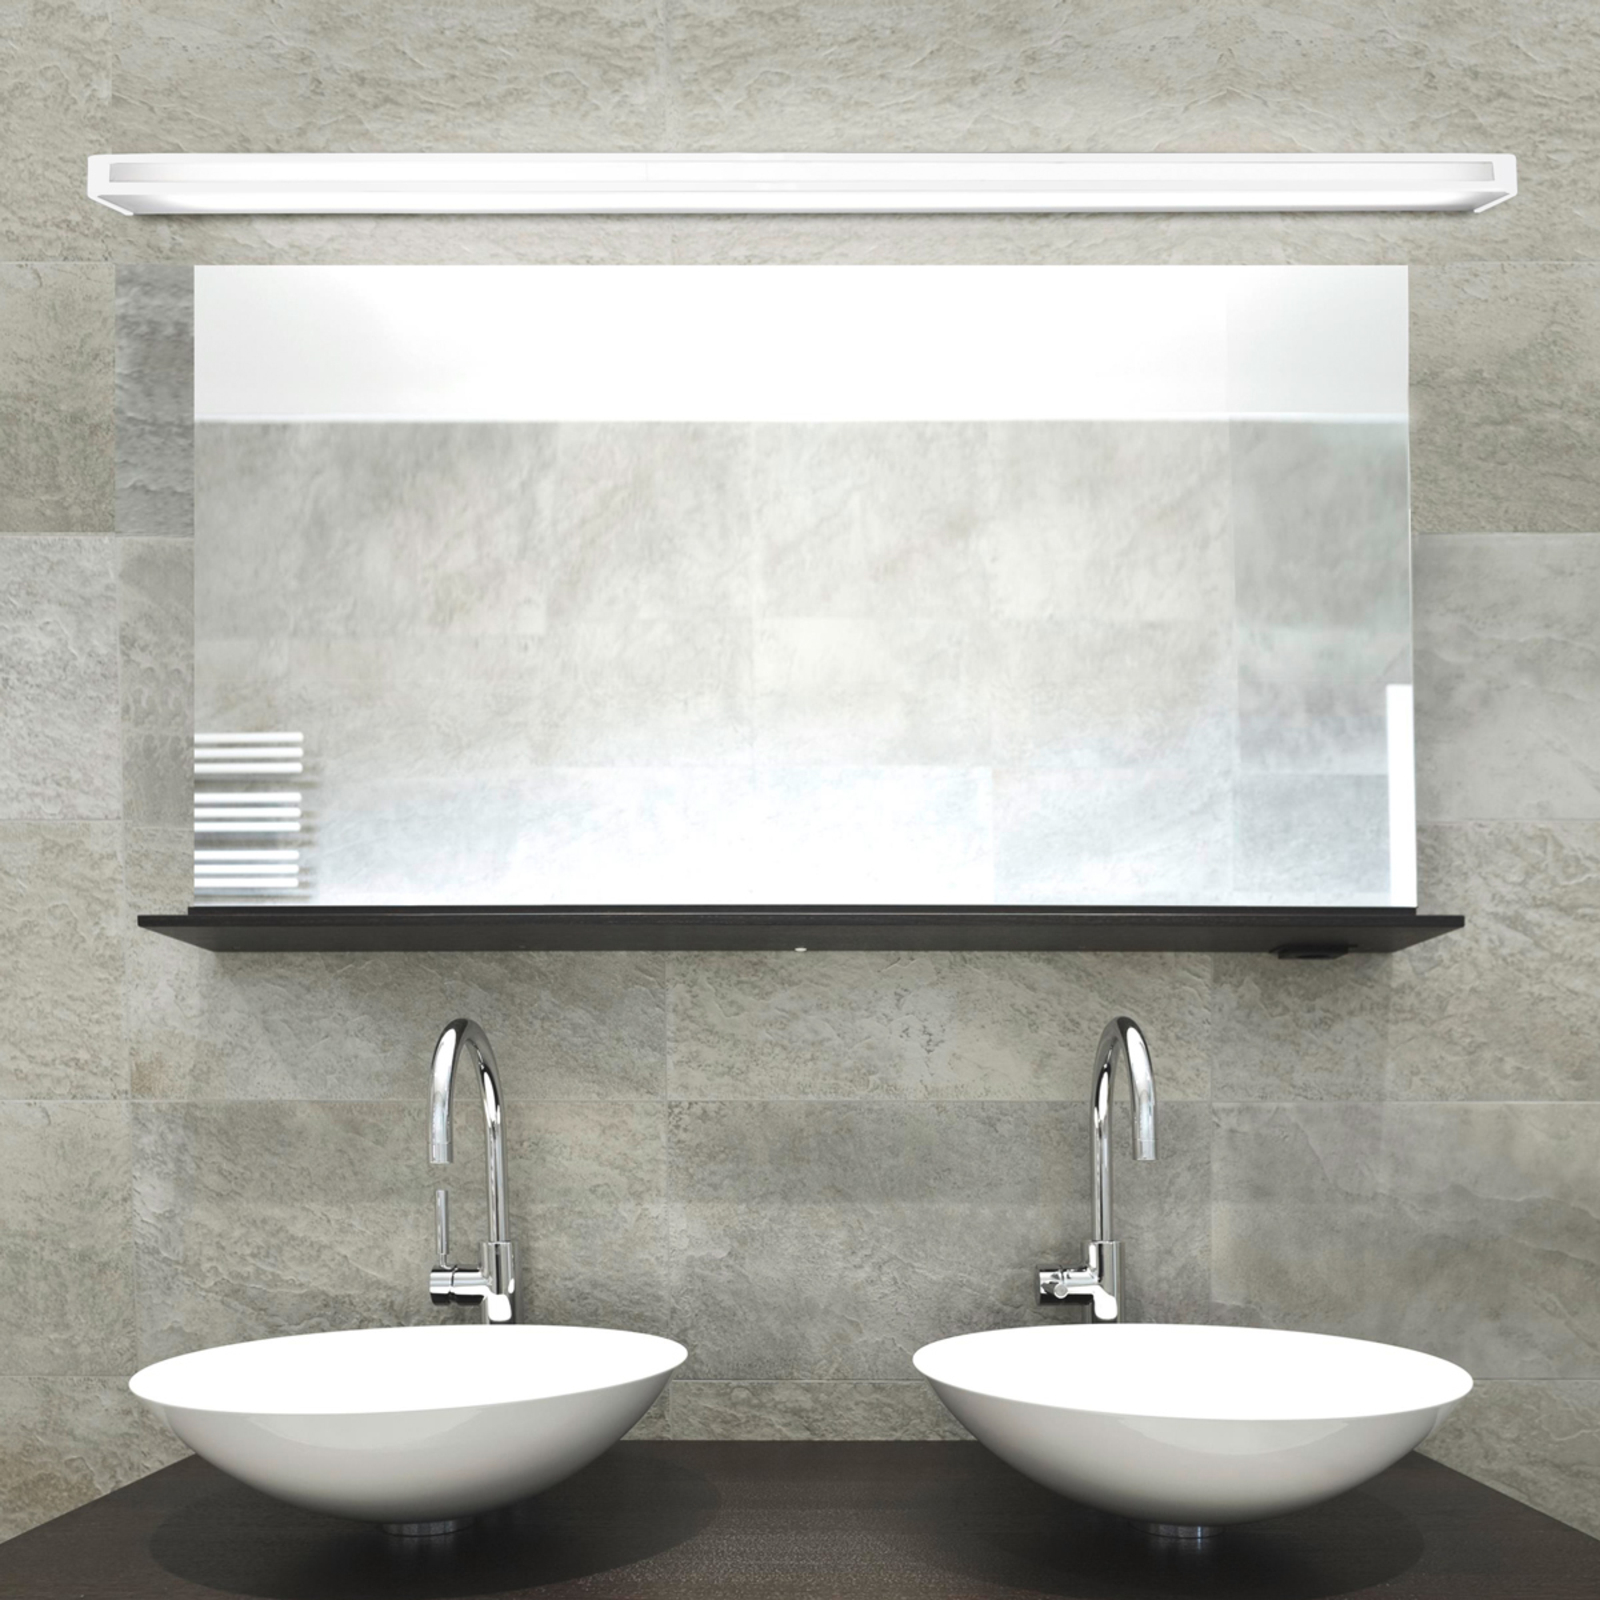 Candeeiro de parede Timeless Arcos LED, IP20 150 cm, branco